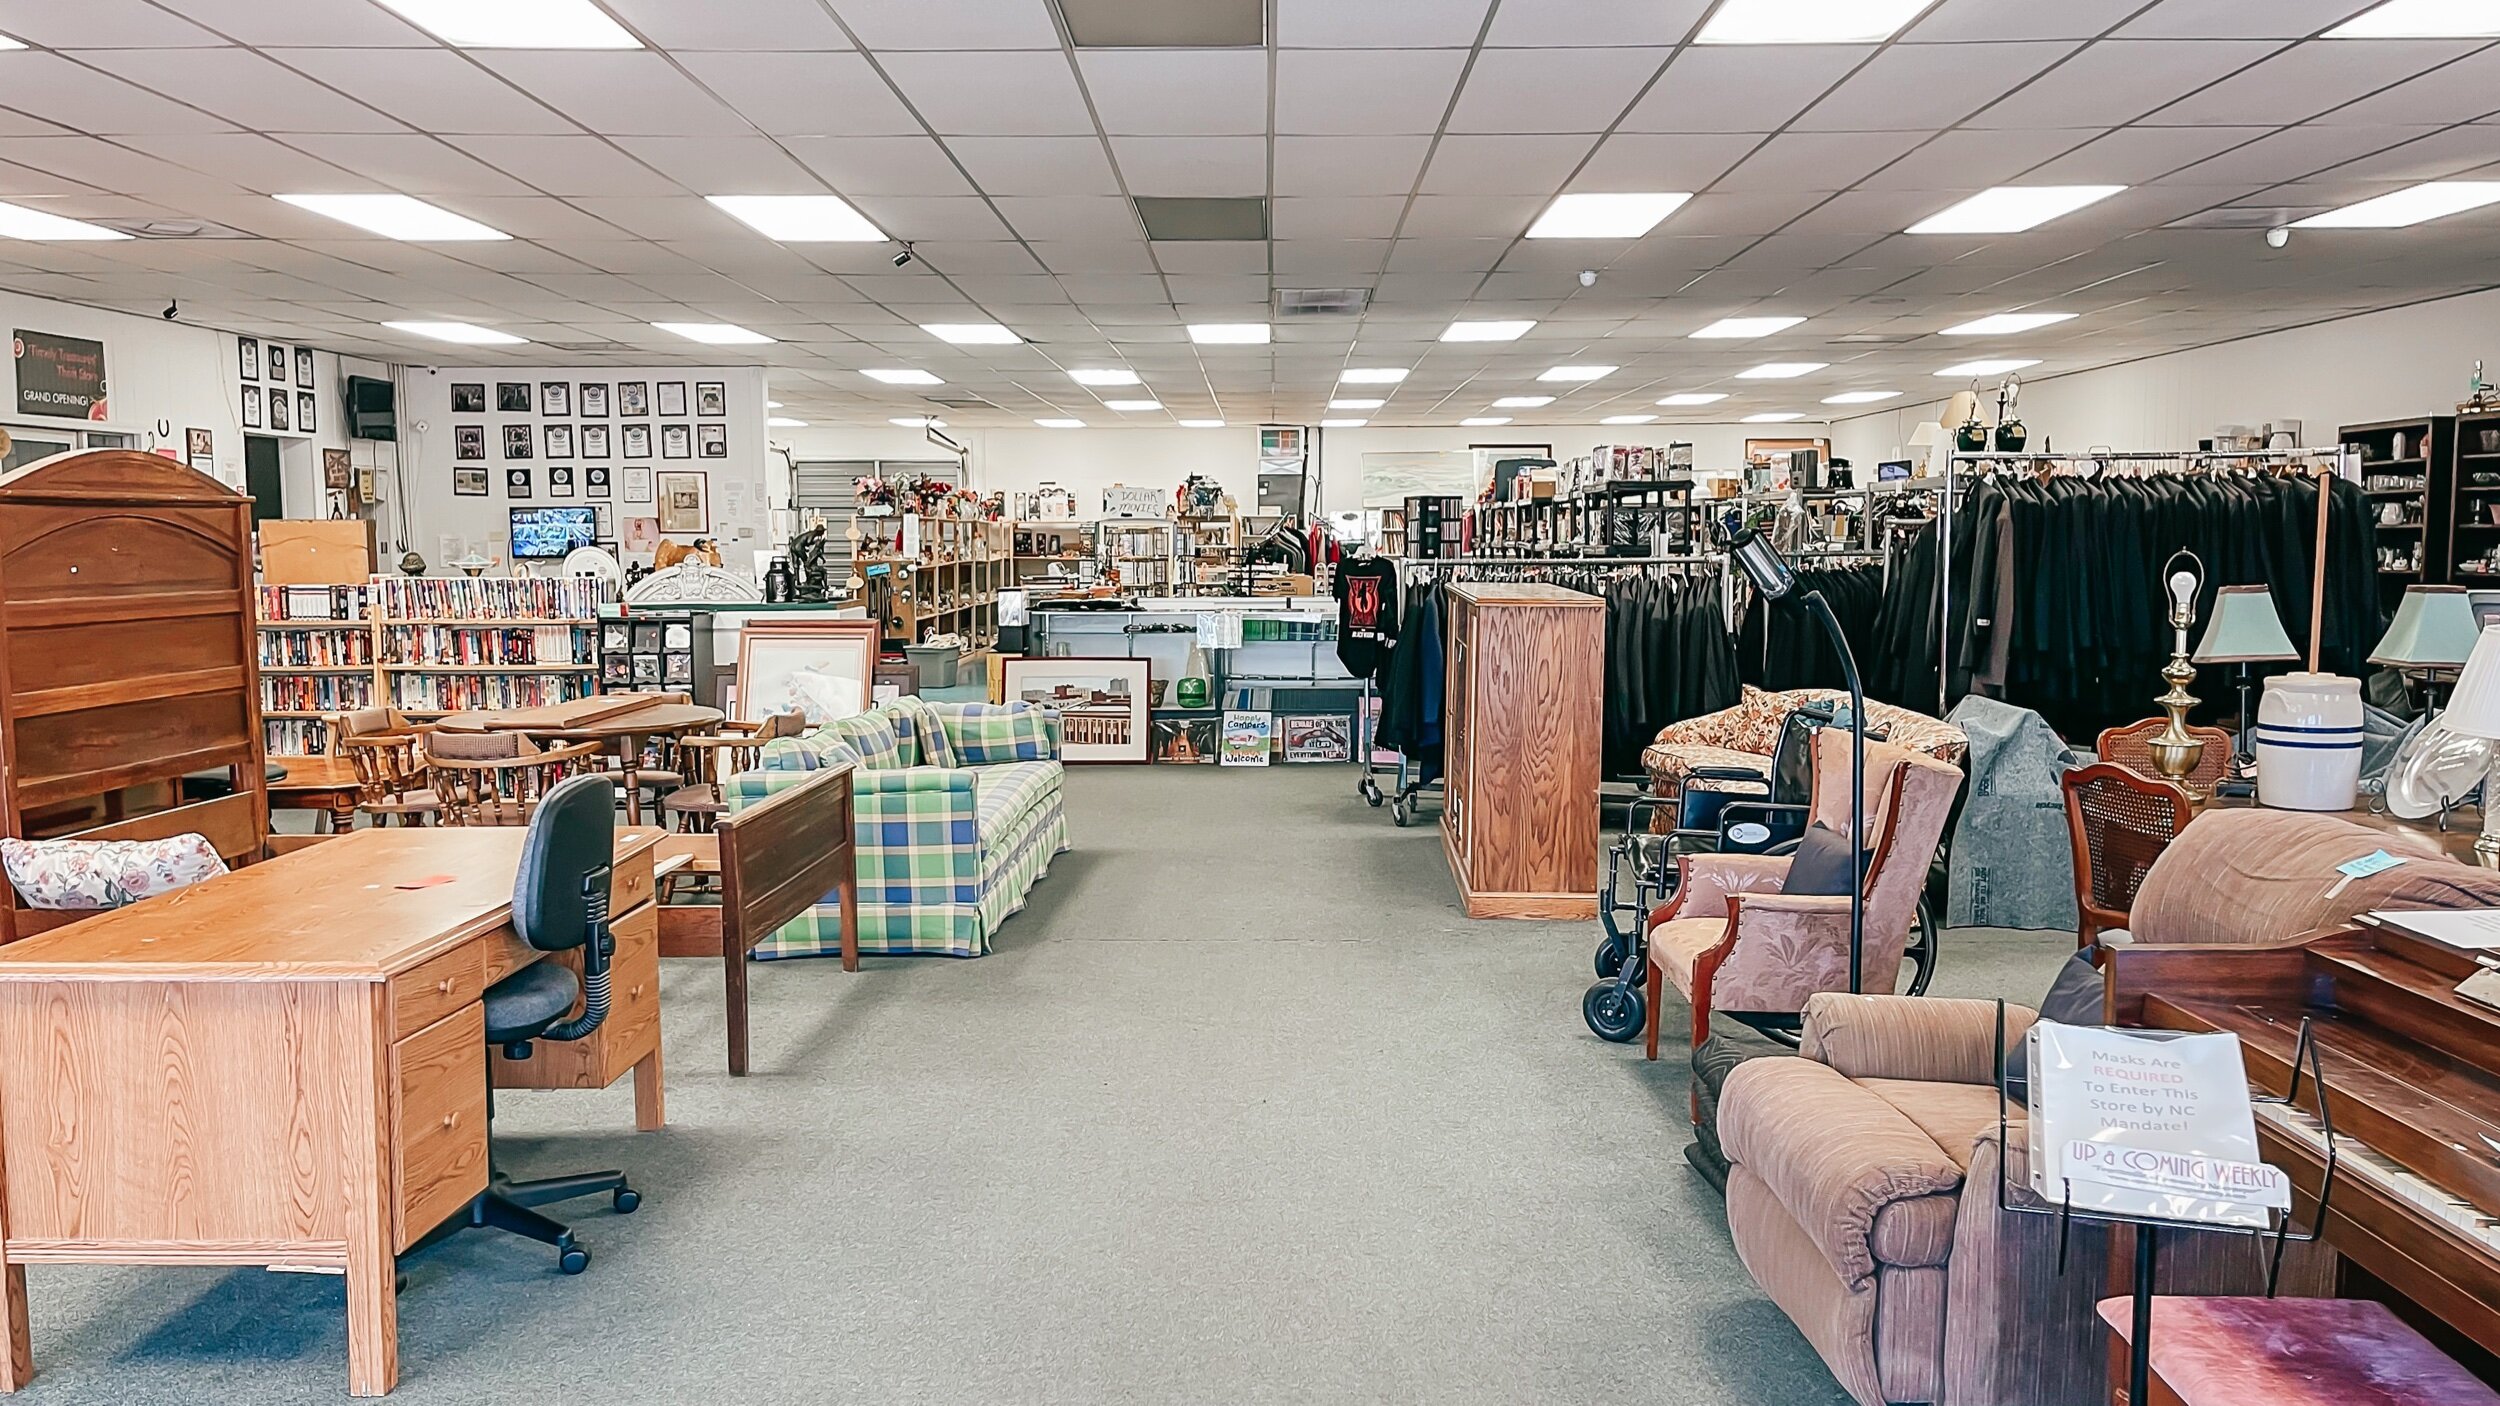 Best Thrift stores in Fayetteville, N.C. - wildfire-restoration.com